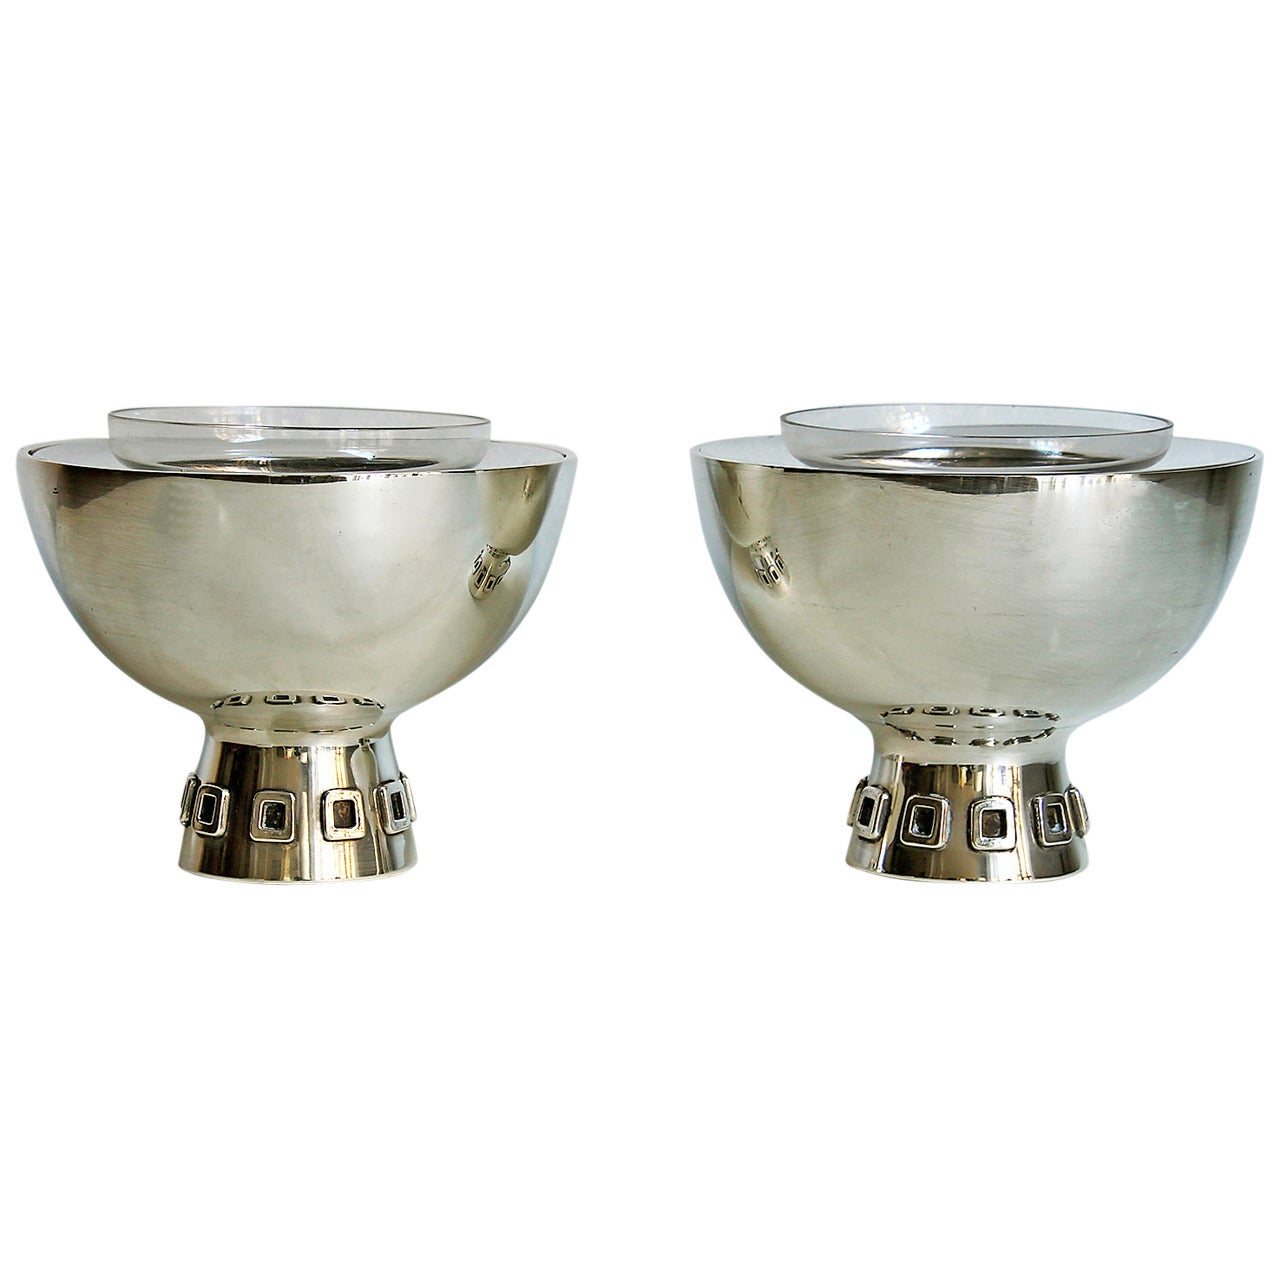 Pair of Mid-Century Modern Silver Caviar Bowls by Puig Doria - Spain